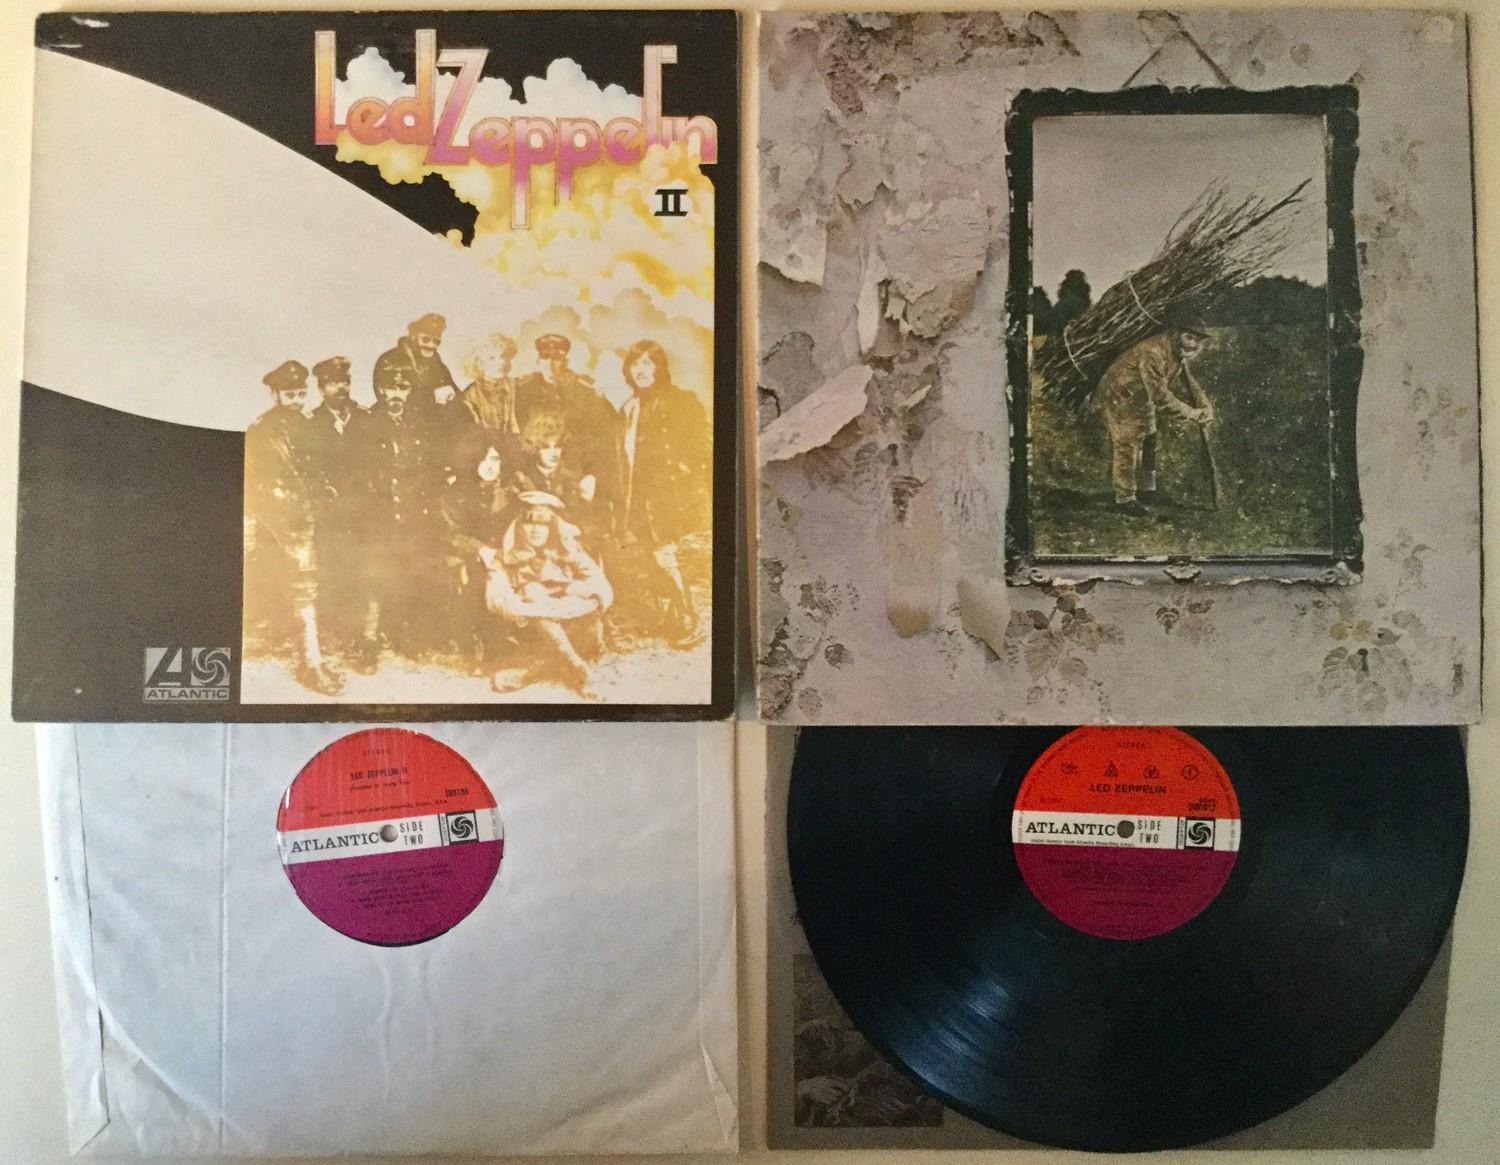 2 X ATLANTIC PLUM LED ZEPPELIN LP VINYL RECORDS. Led Zeppelin 2 on Atlantic 588198 from 1969 and Led